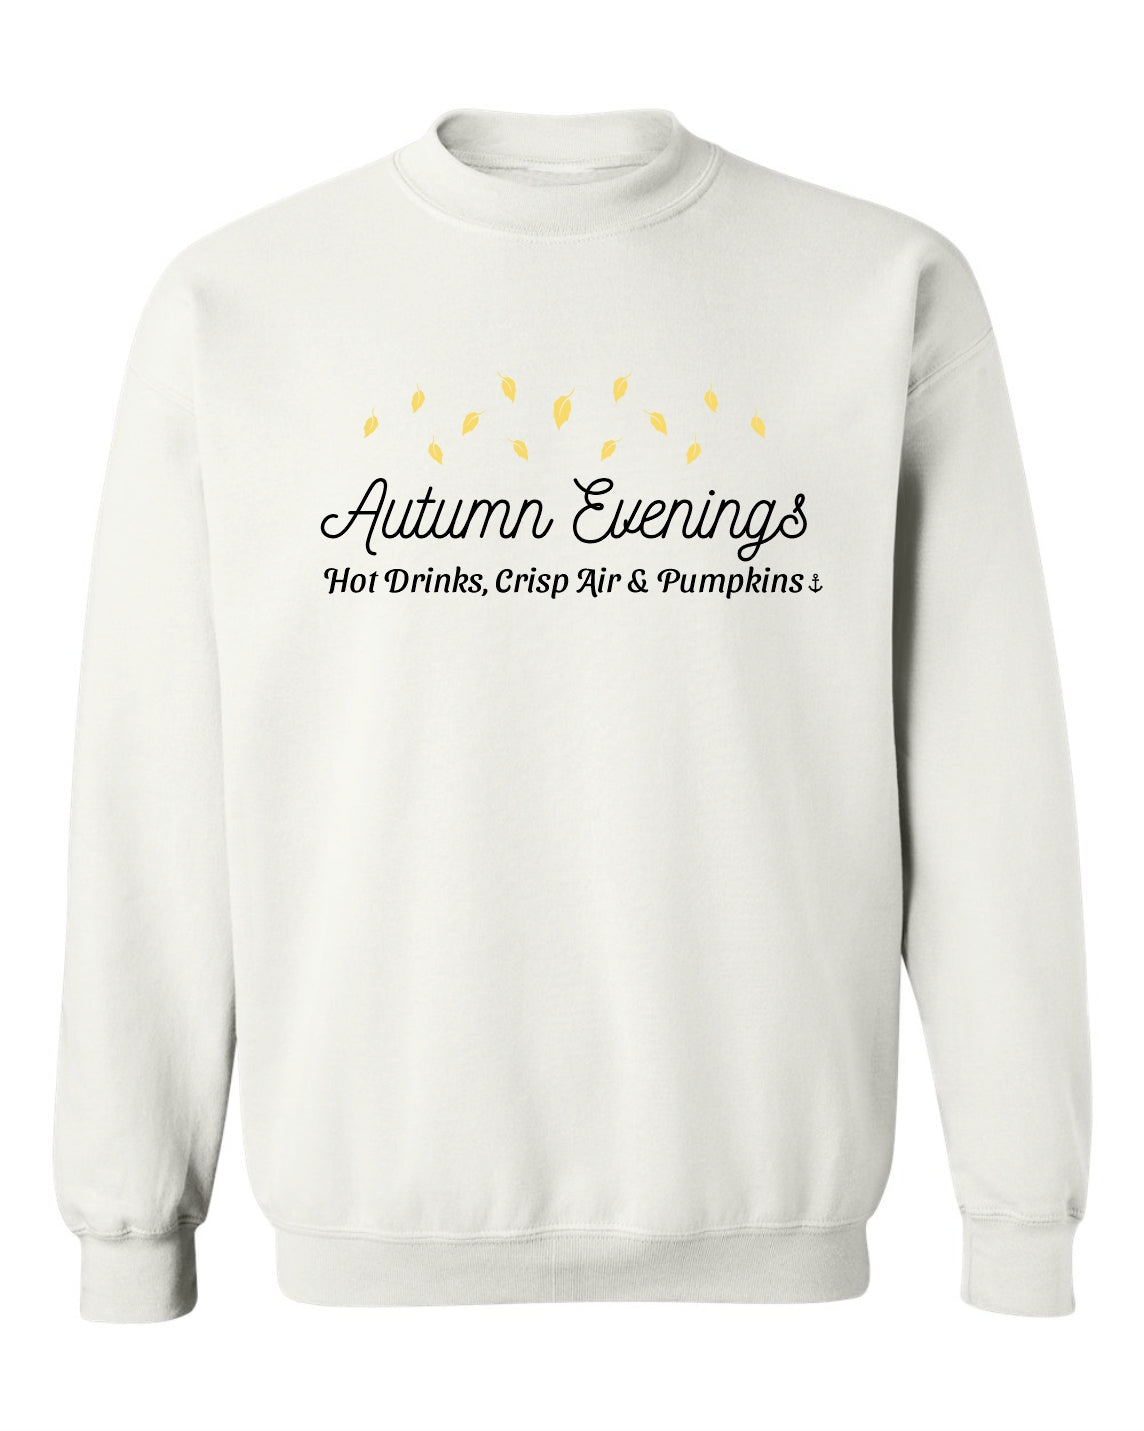 "Autumn Evenings" Unisex Crewneck Sweatshirt